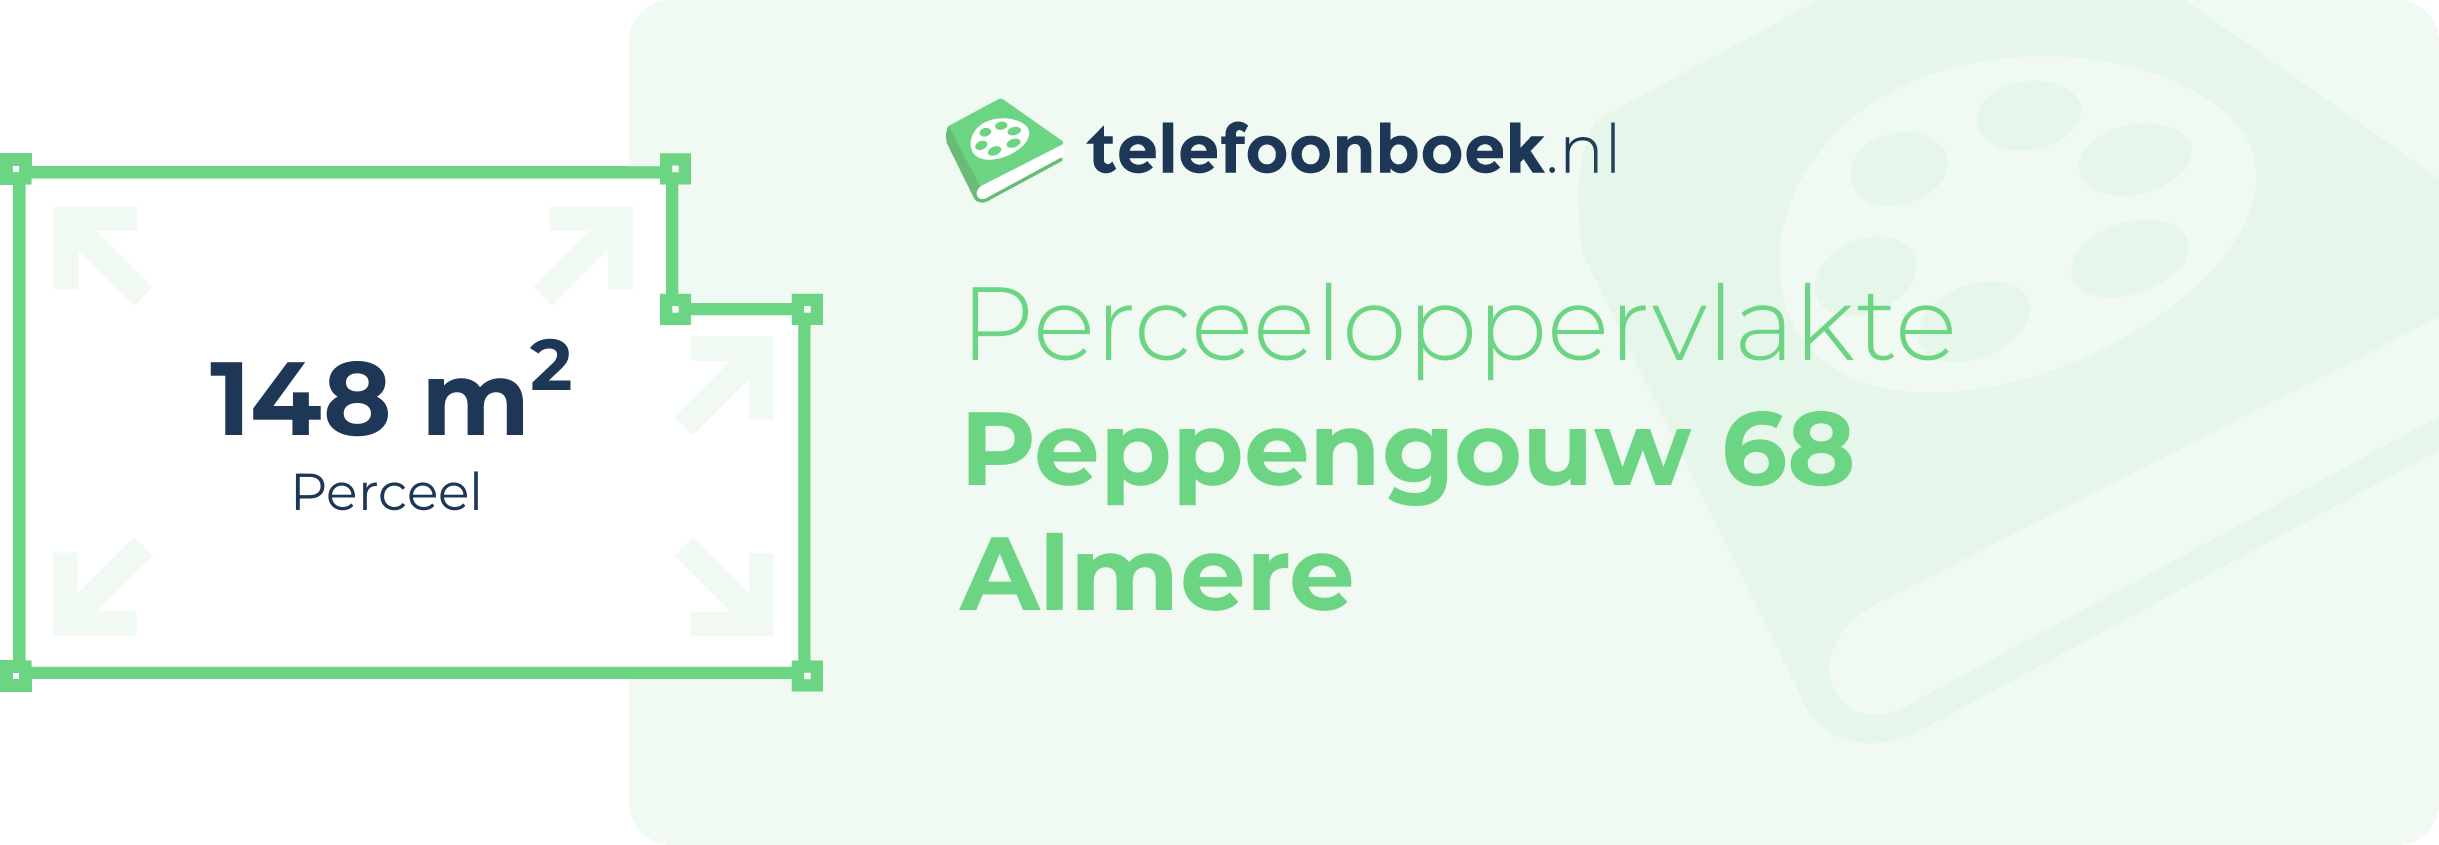 Perceeloppervlakte Peppengouw 68 Almere